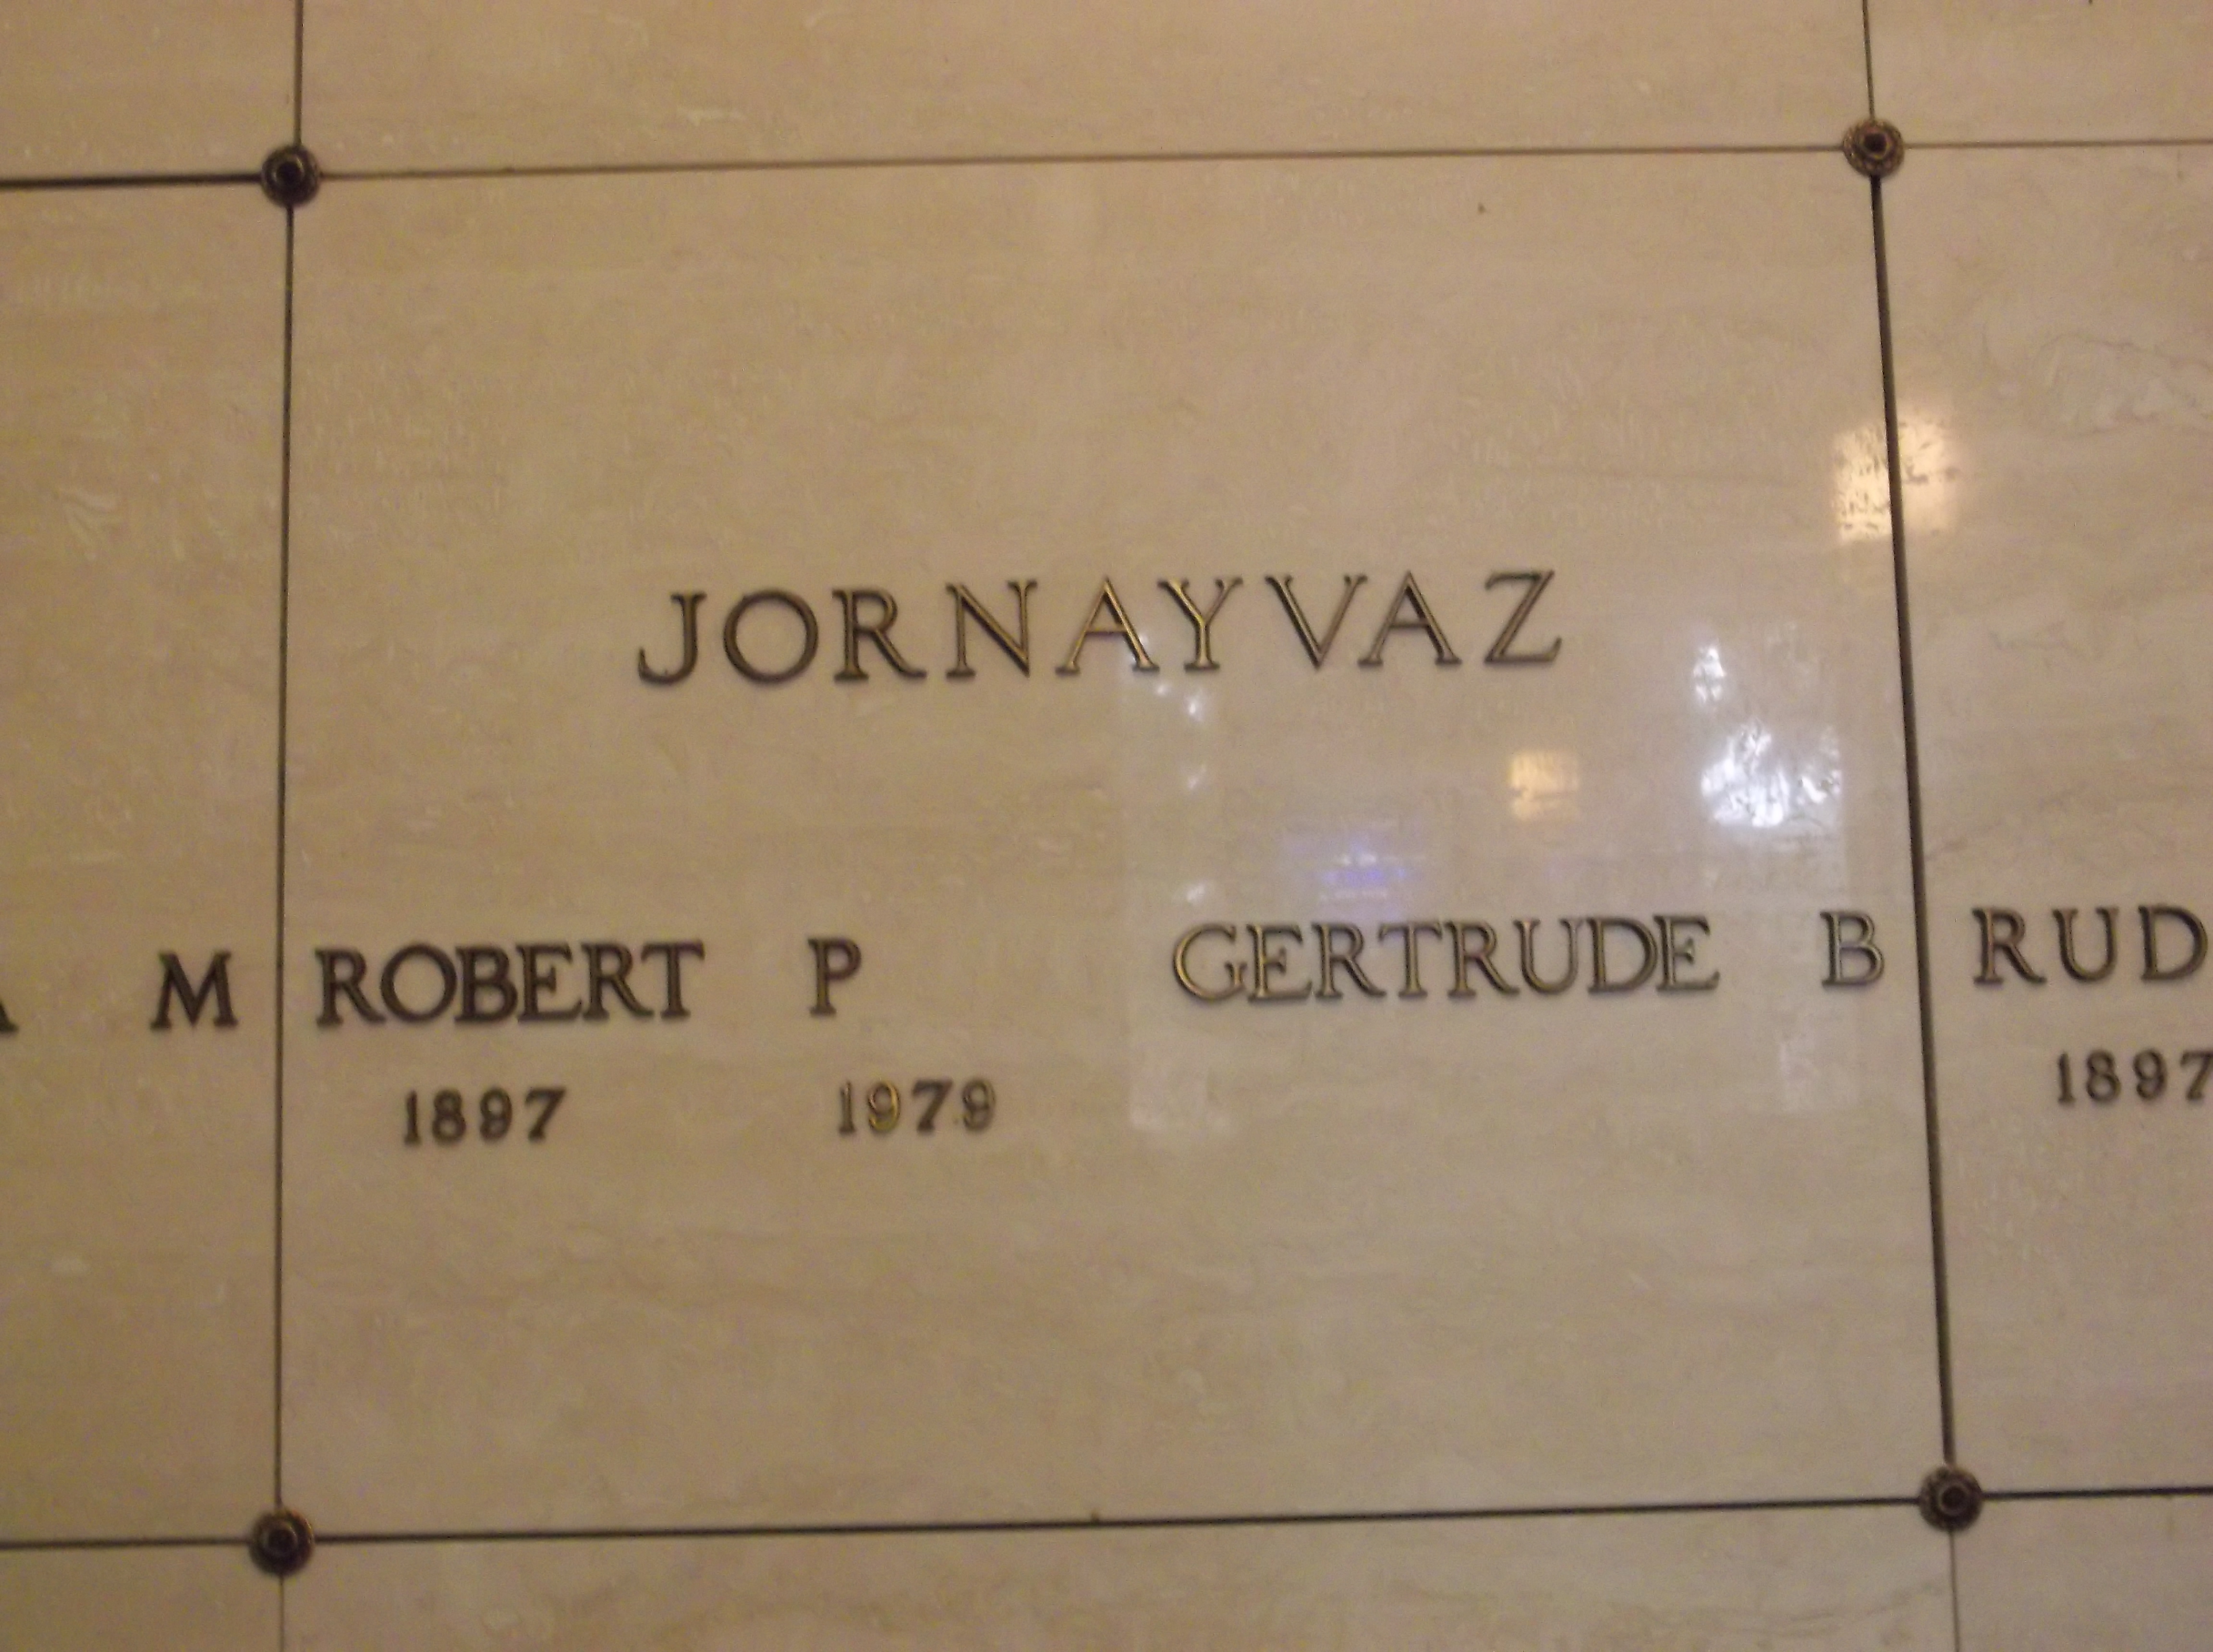 Robert P Jornayvaz